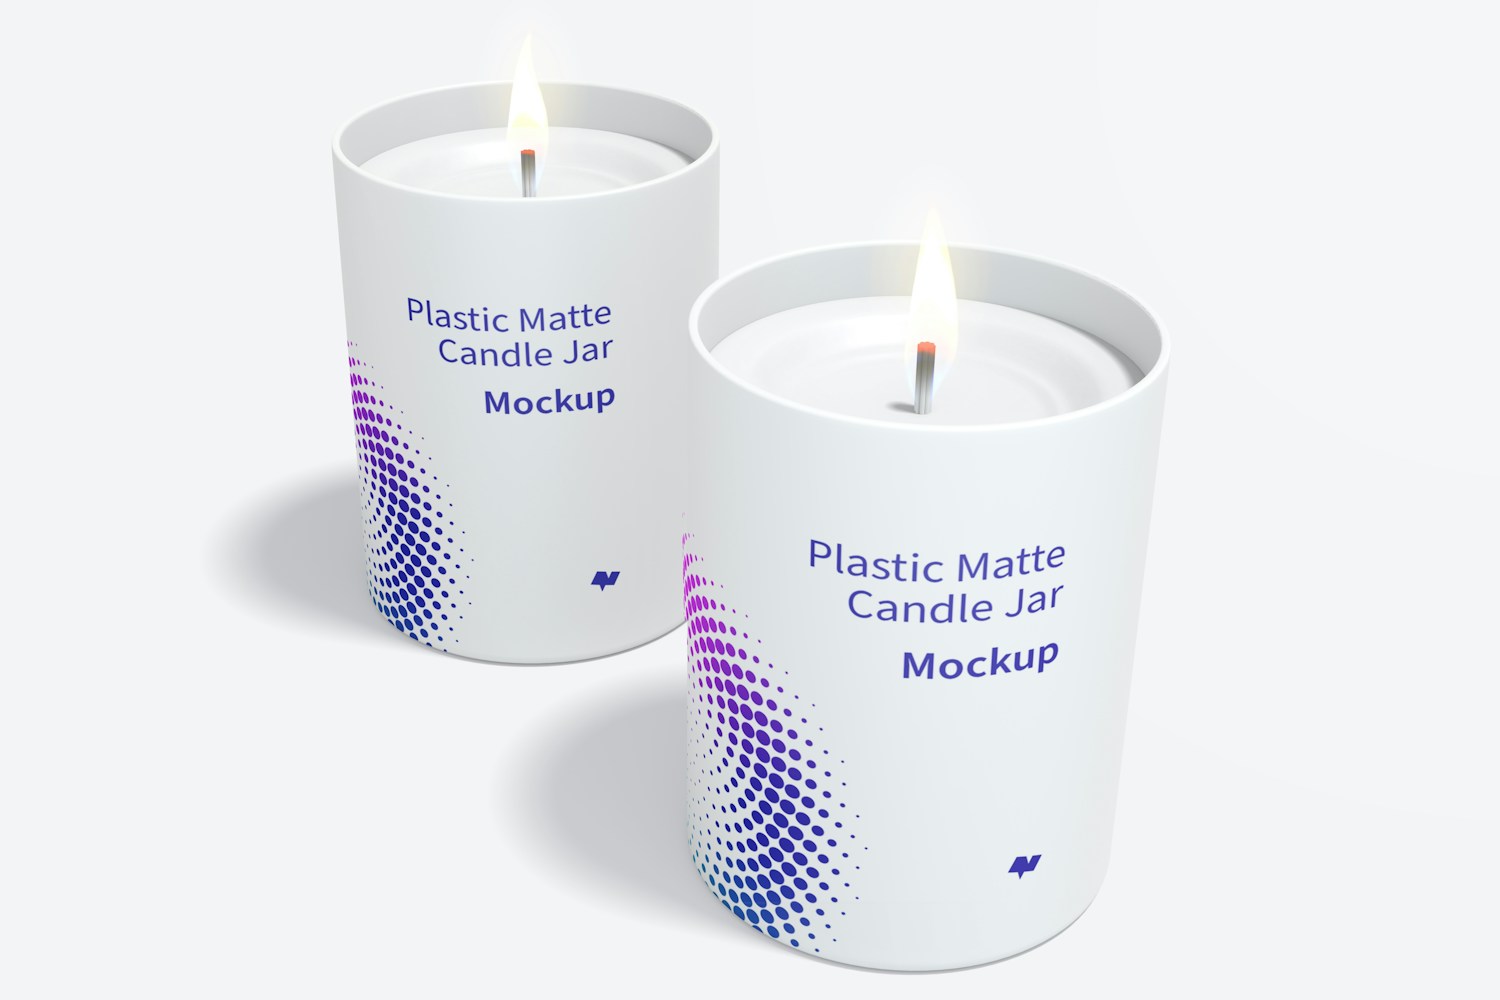 Plastic Matte Candle Jars Mockup, Front View